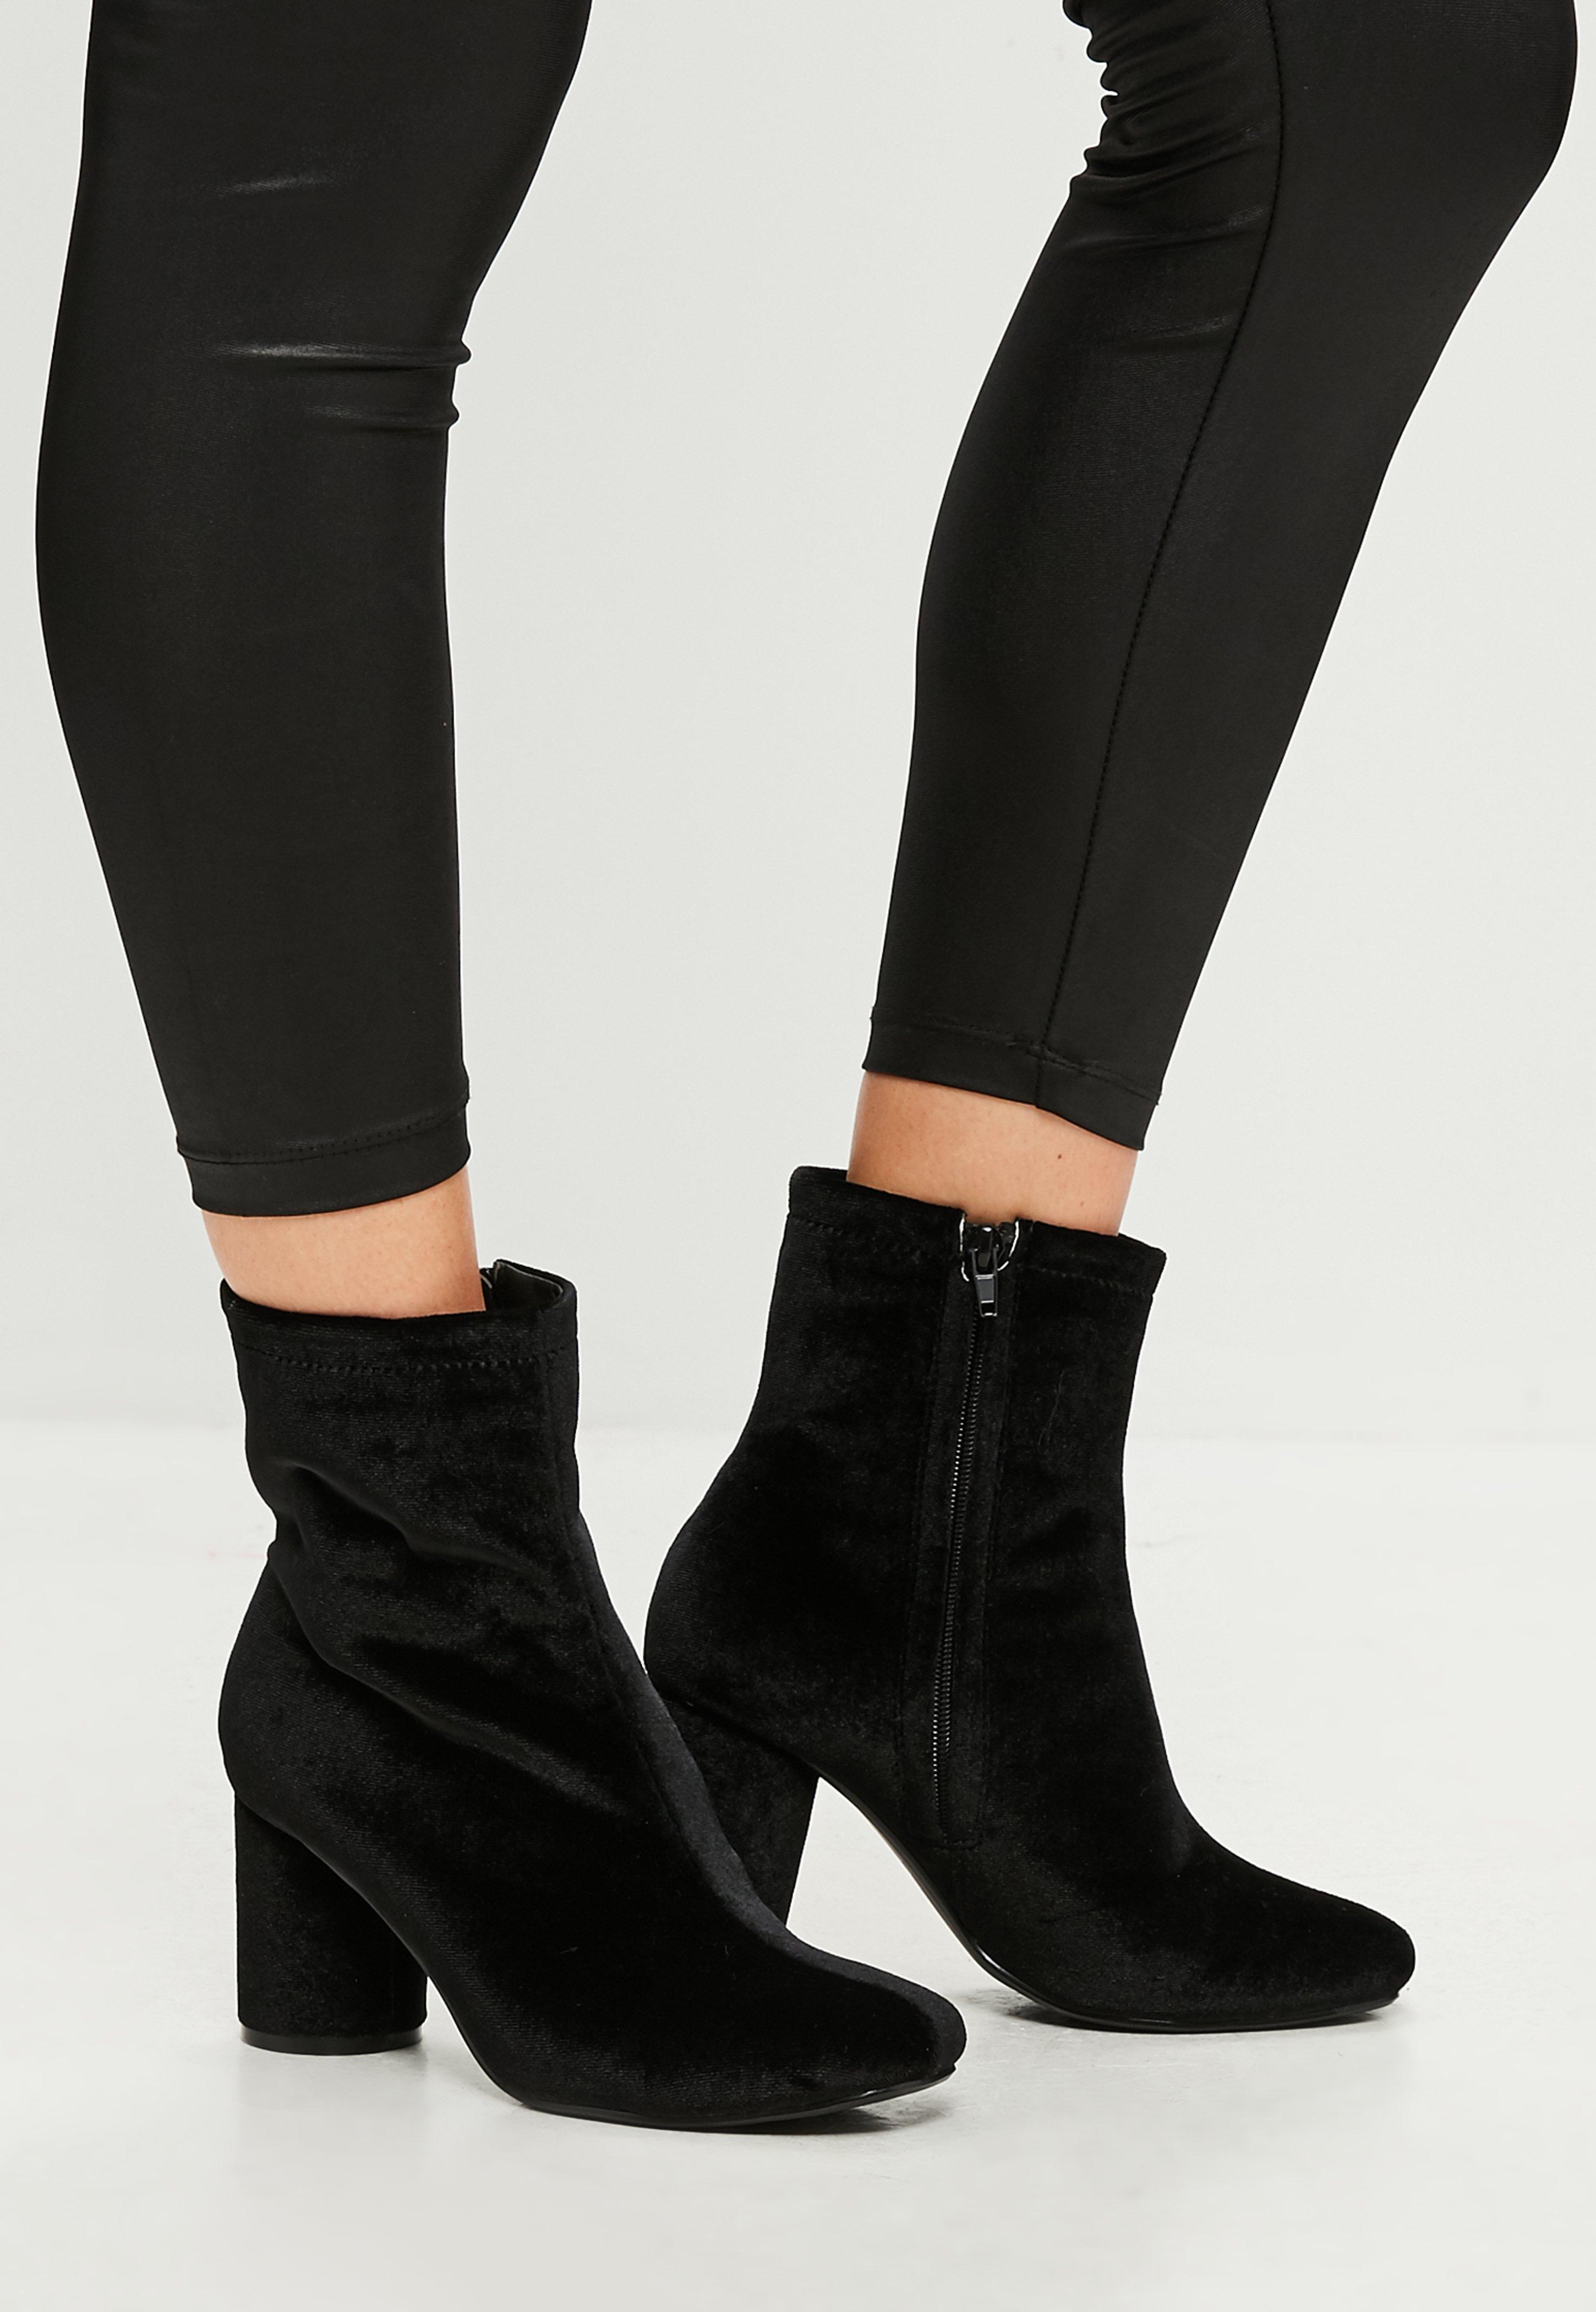 Lyst Missguided Black Velvet Heeled Ankle Boots in Black